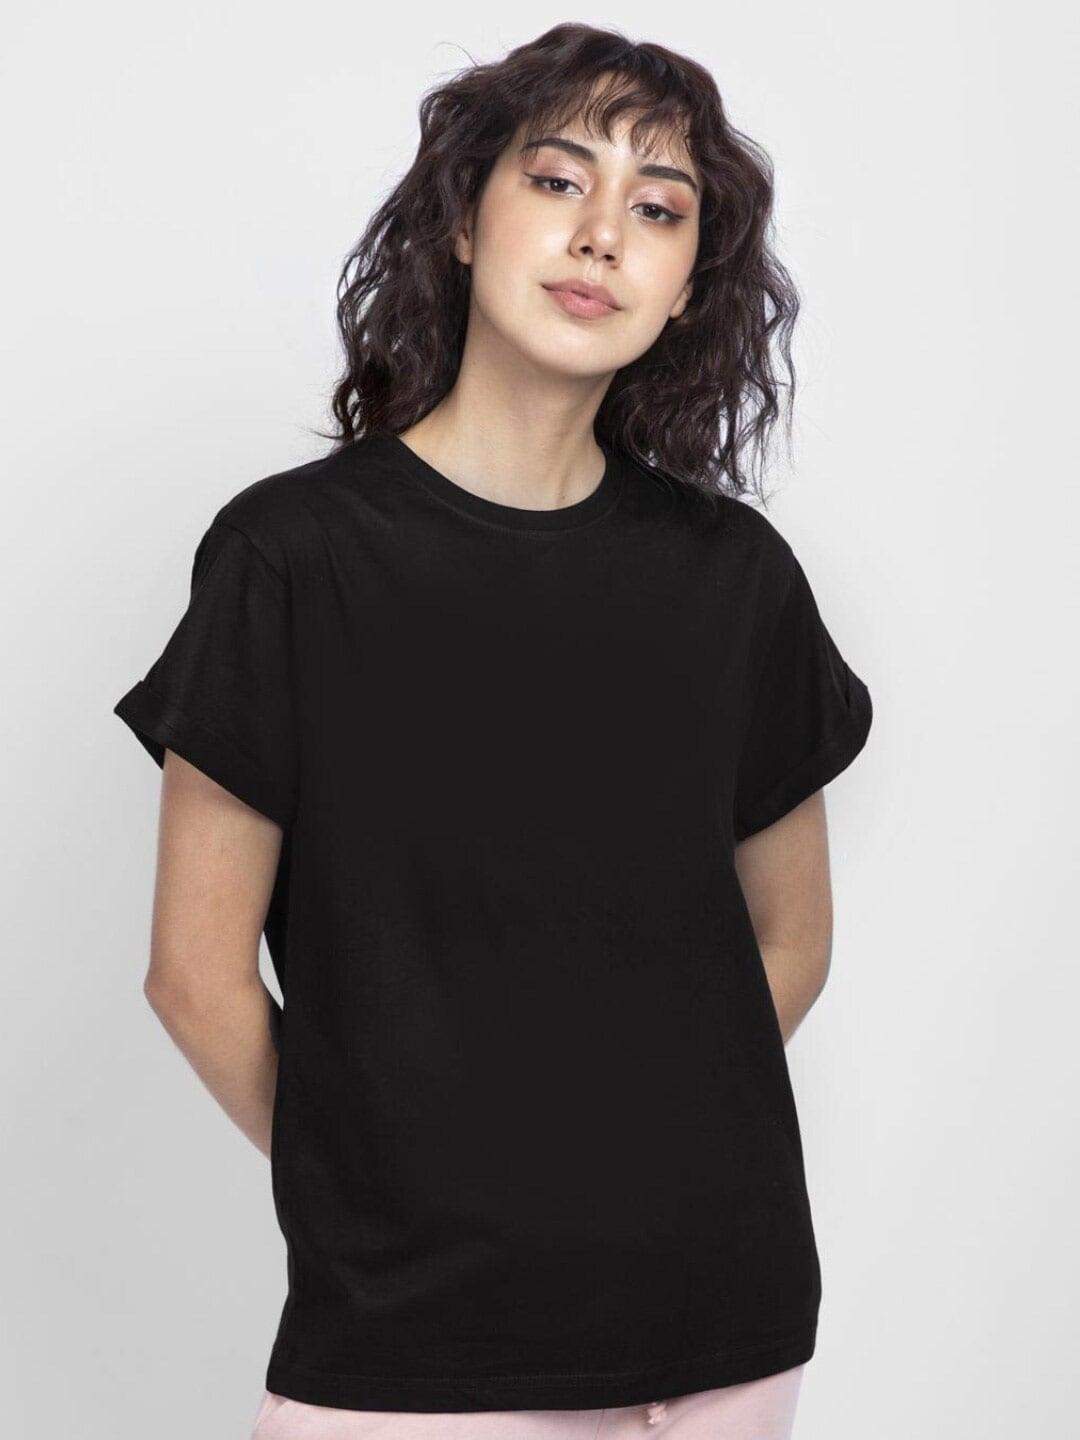 bewakoof women black 3 extended sleeves t-shirt